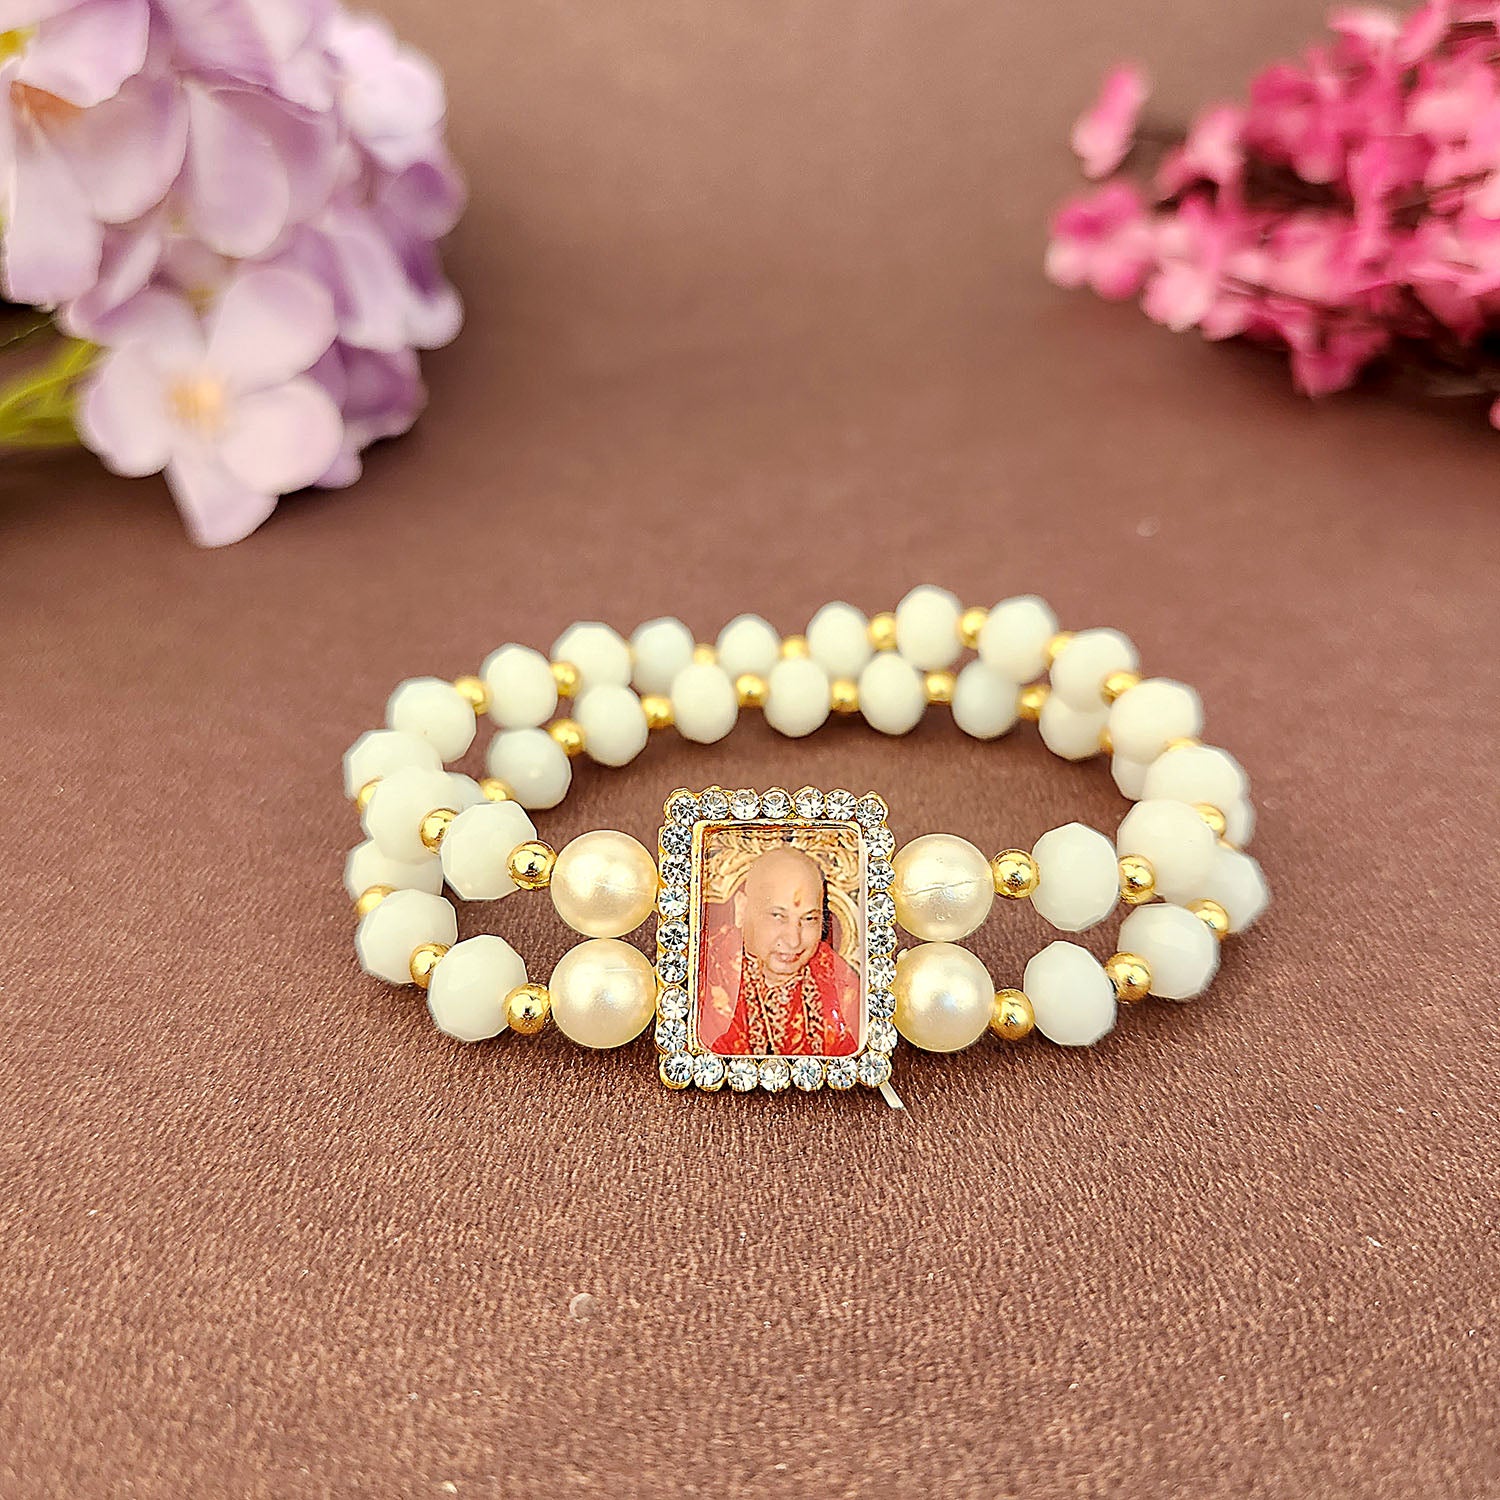 Colorful Rice Beads Bracelets -Summer Beach Friendship Bracelet Handmade  Jewelry | eBay